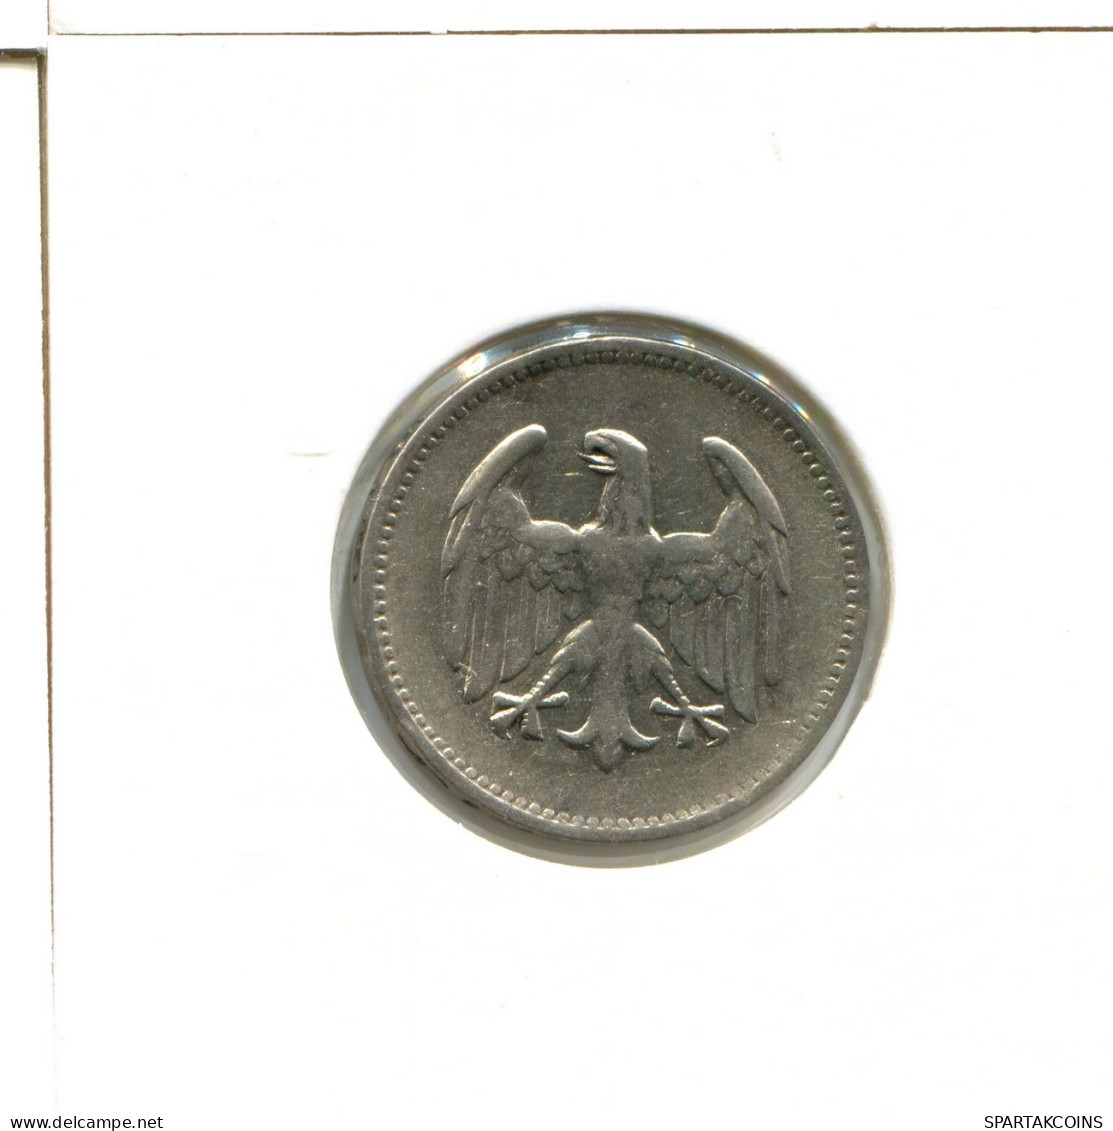 1 DM 1924 A GERMANY Coin SILVER #AX542.U.A - 1 Mark